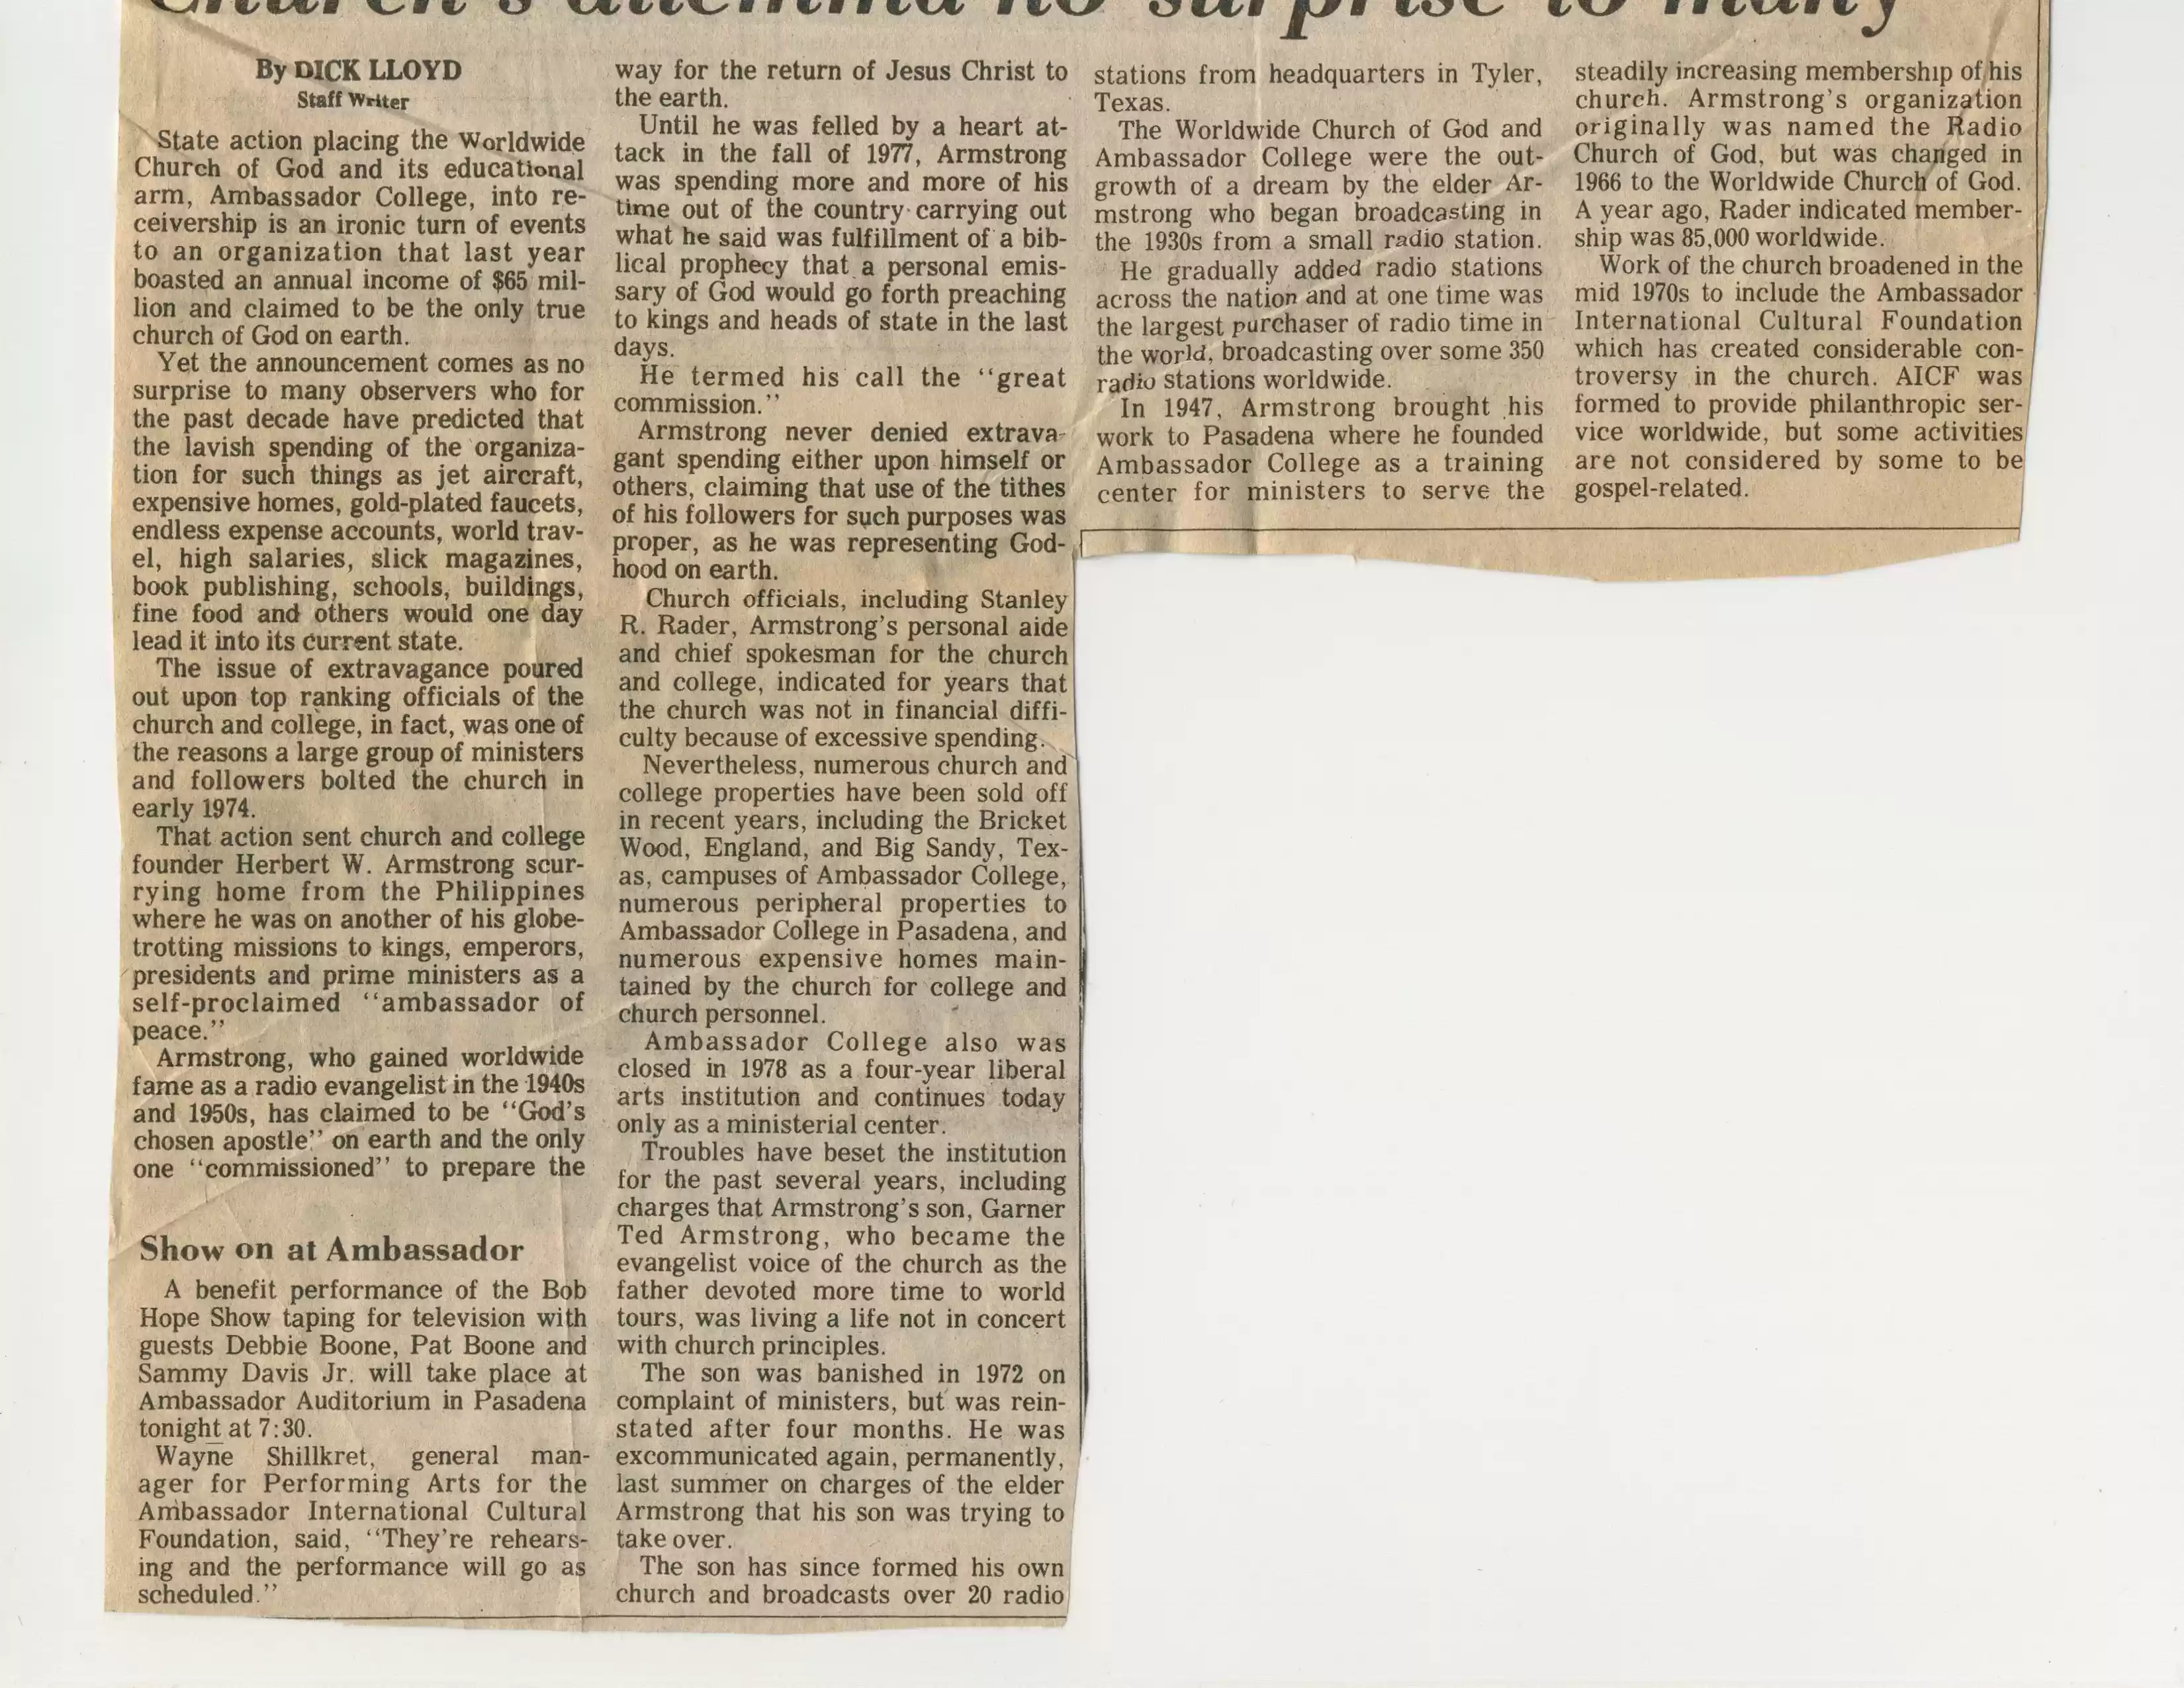 7. Pasadena Star News, 1-4-79